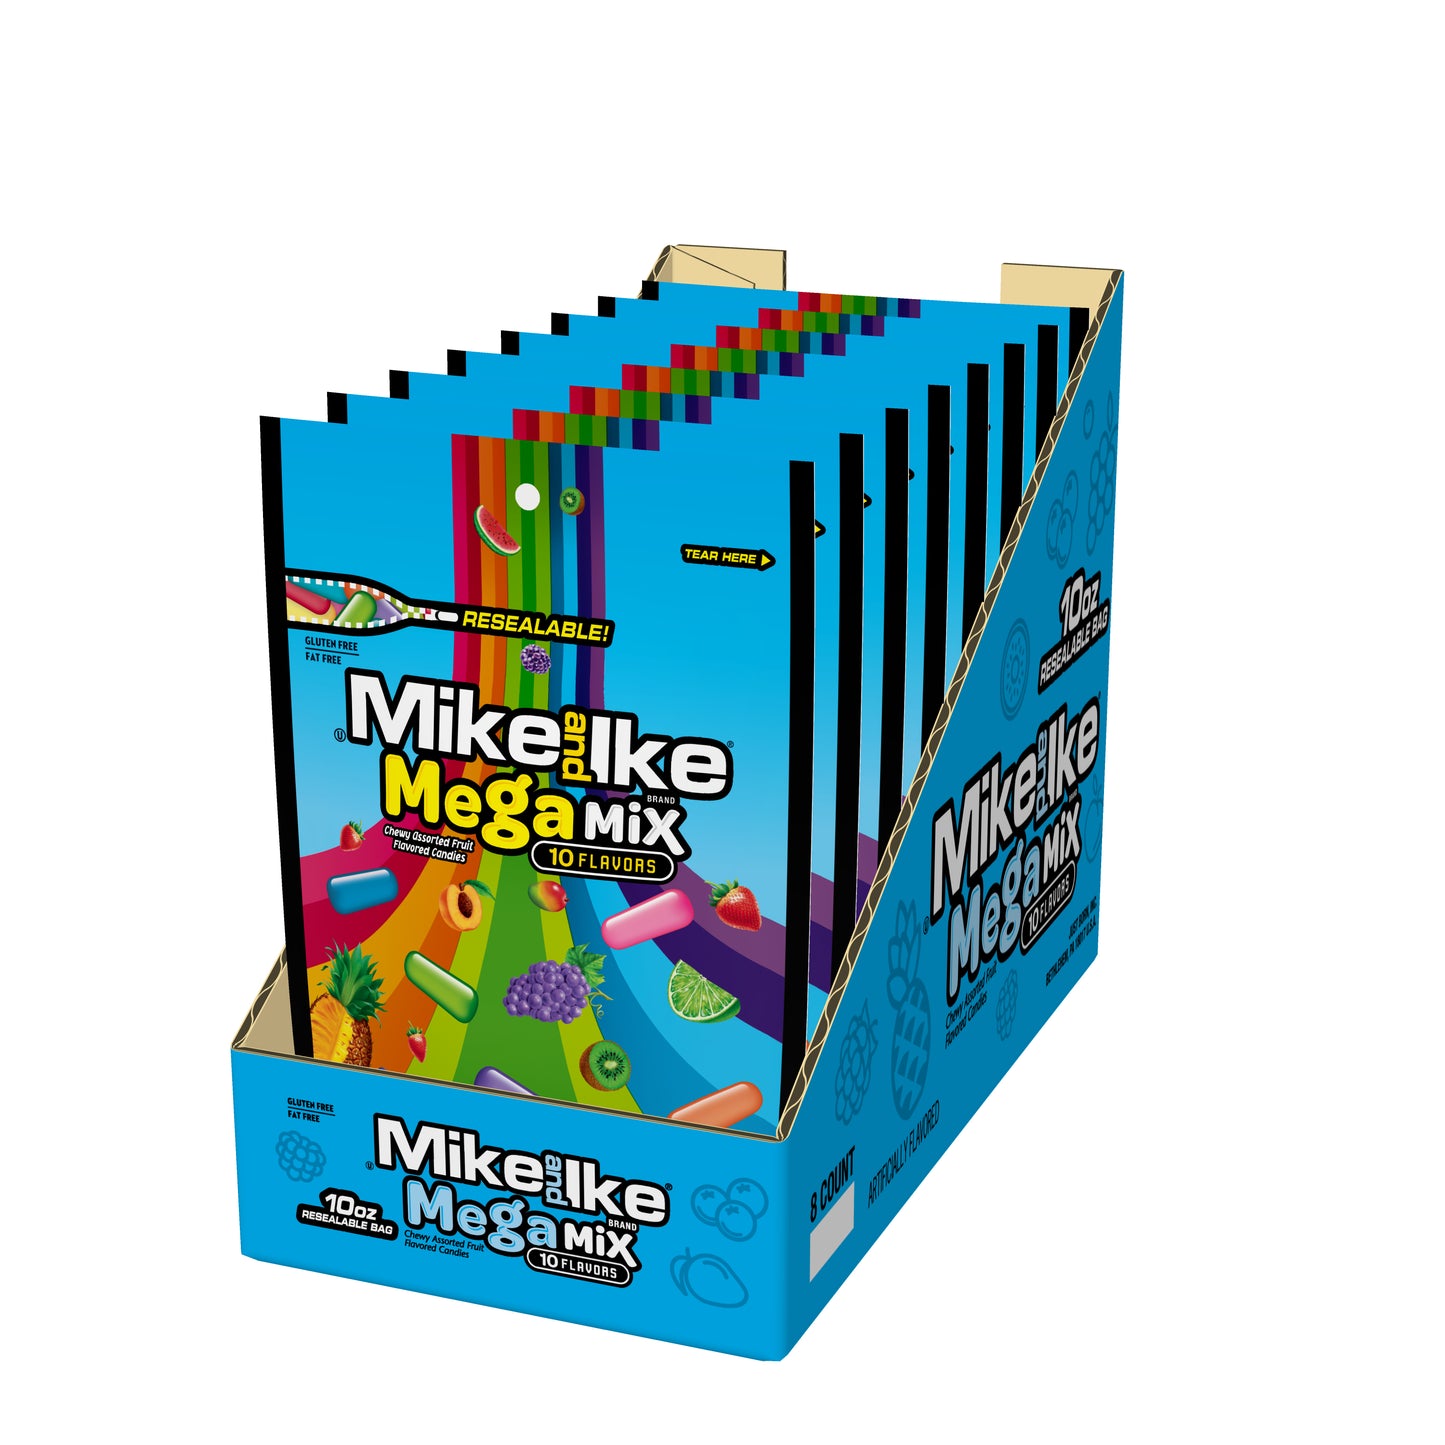 Mike & Ike Mega Mix SUB 10oz